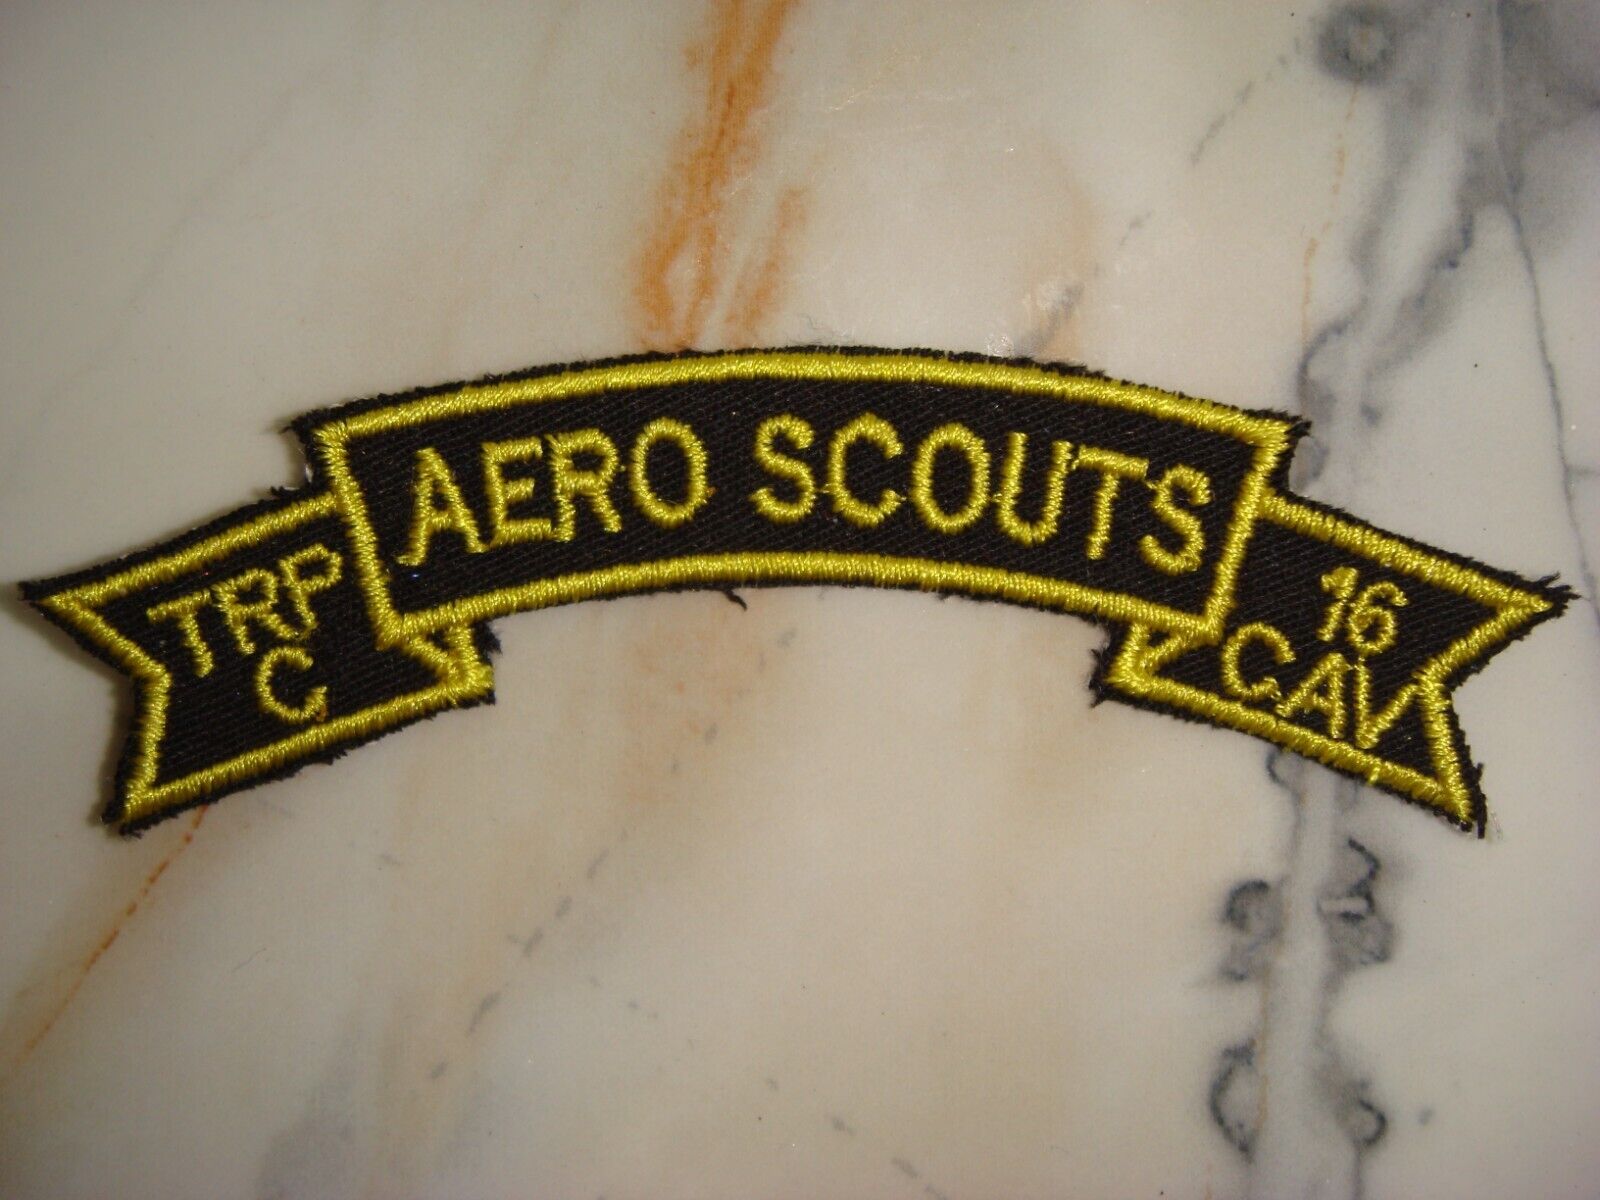 US C TROOP AERO SCOUTS 16th CAVALRY REGIMENT, VIETNAM WAR SCROLL PATCH